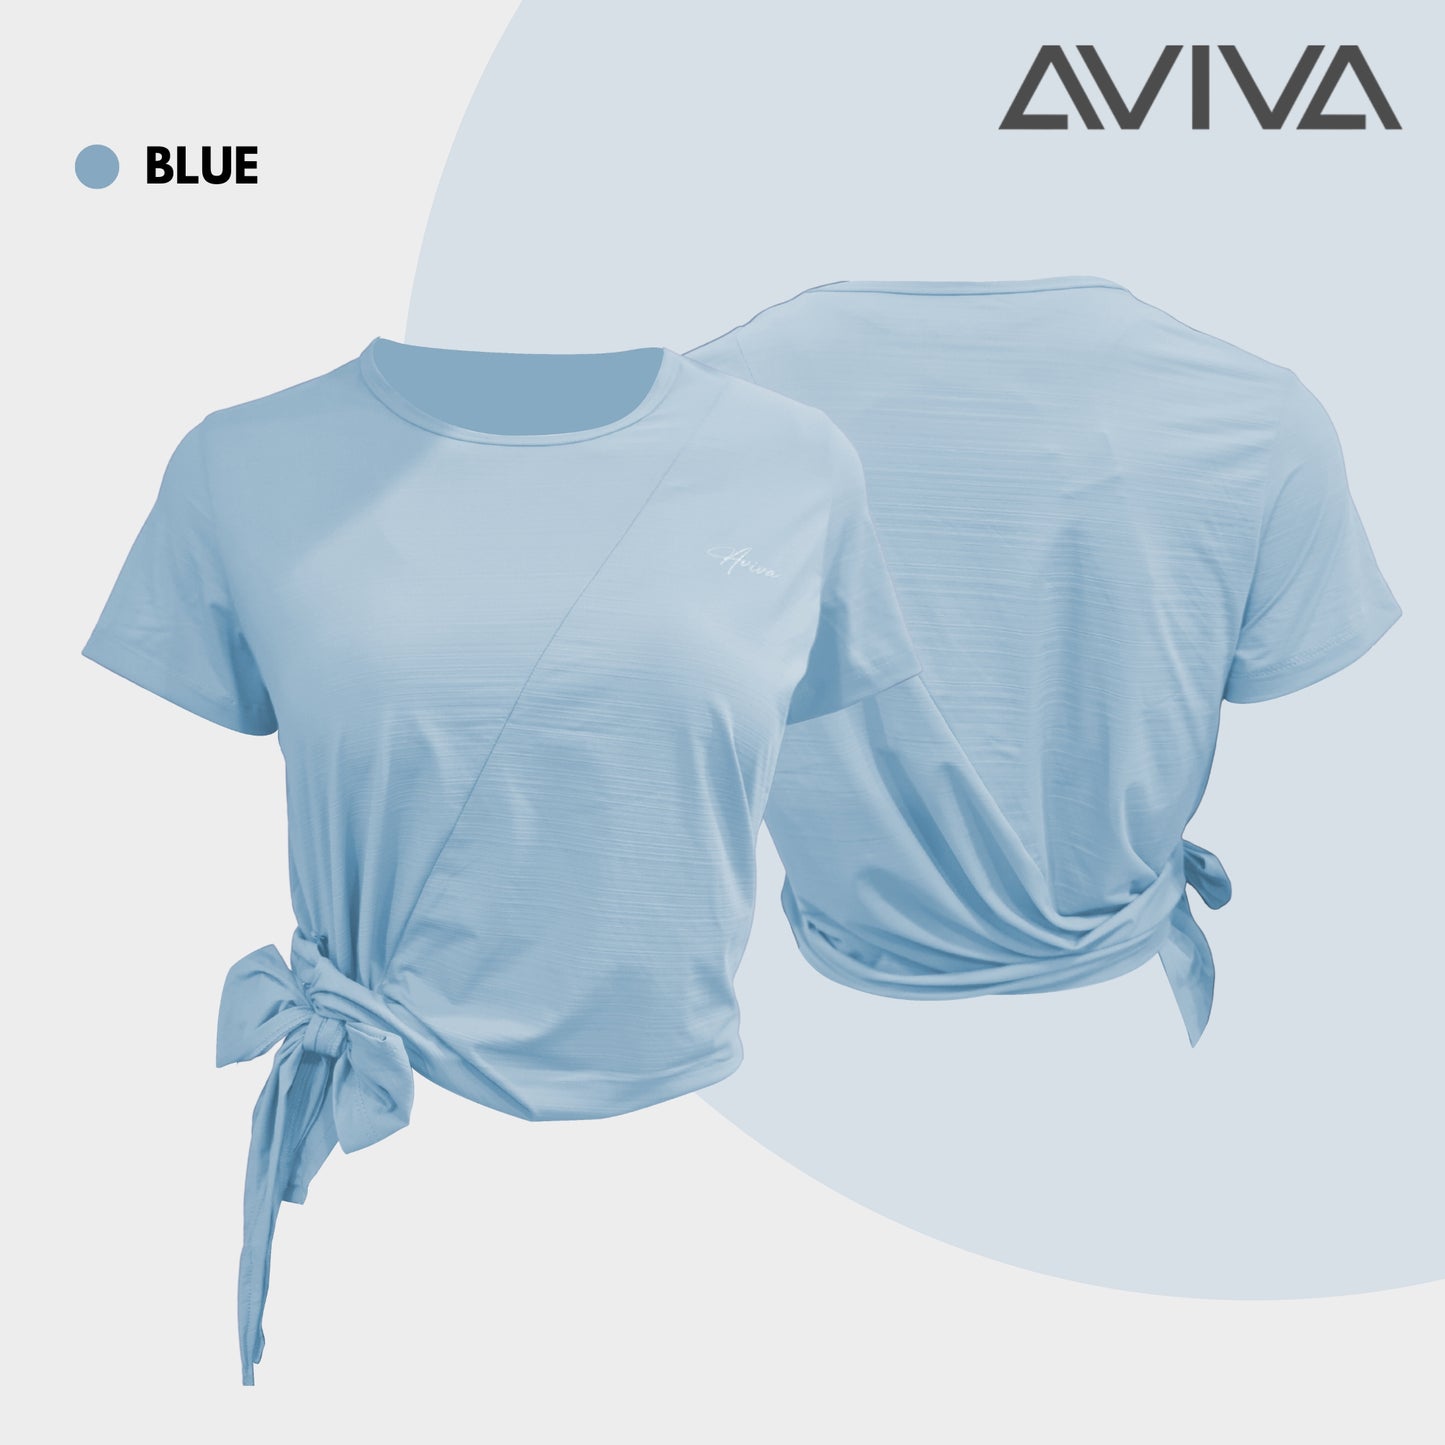 AVIVA Active Soft & Comfortable Short Sleeve Tee (81-8108)